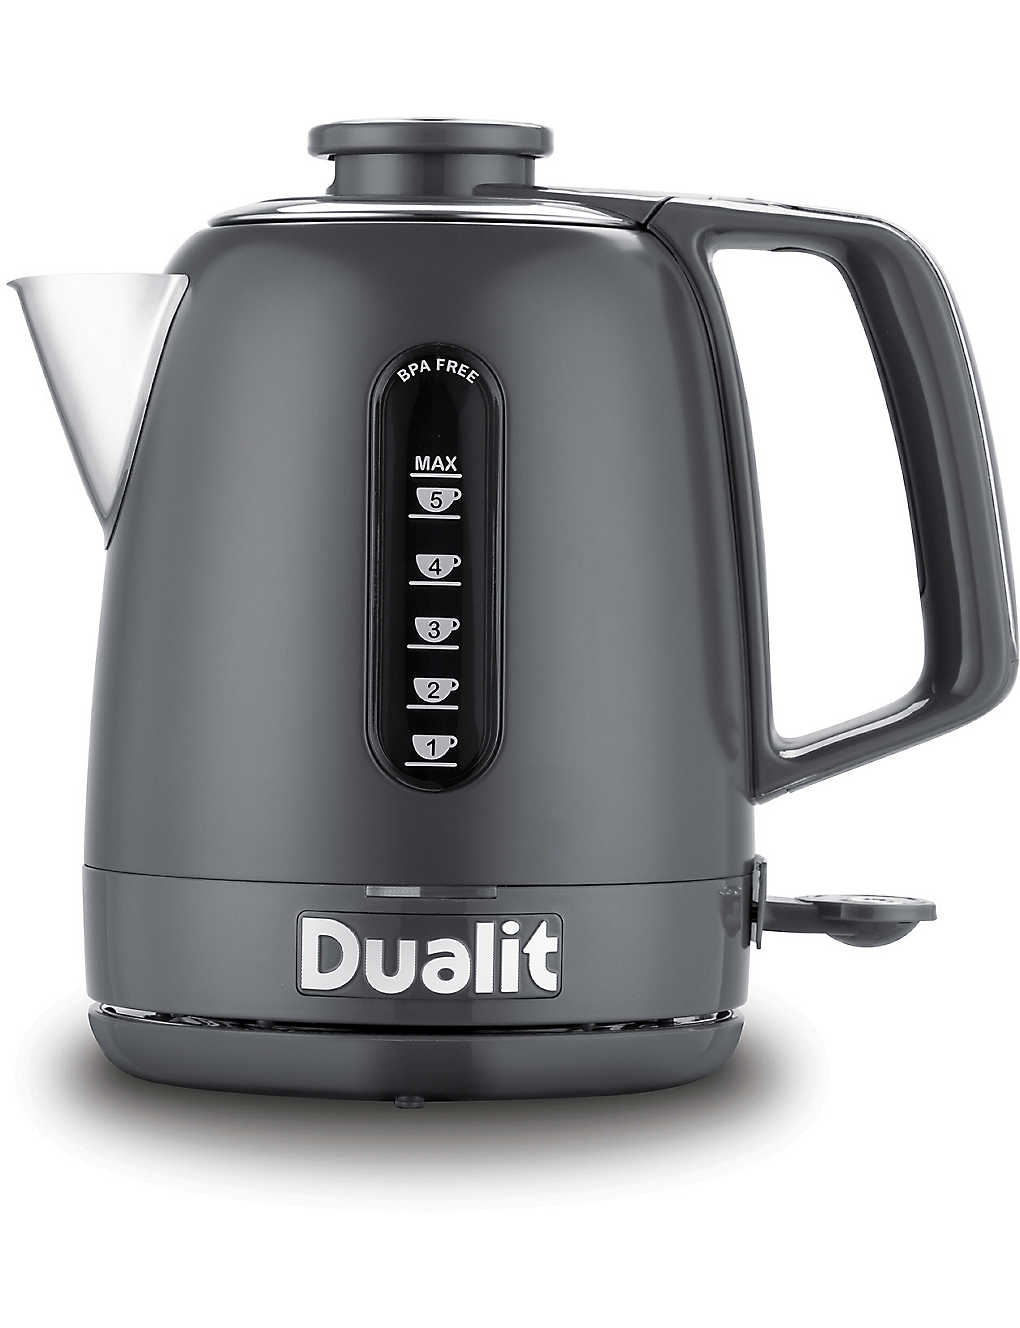 DUALIT - Domus matte stainless steel kettle